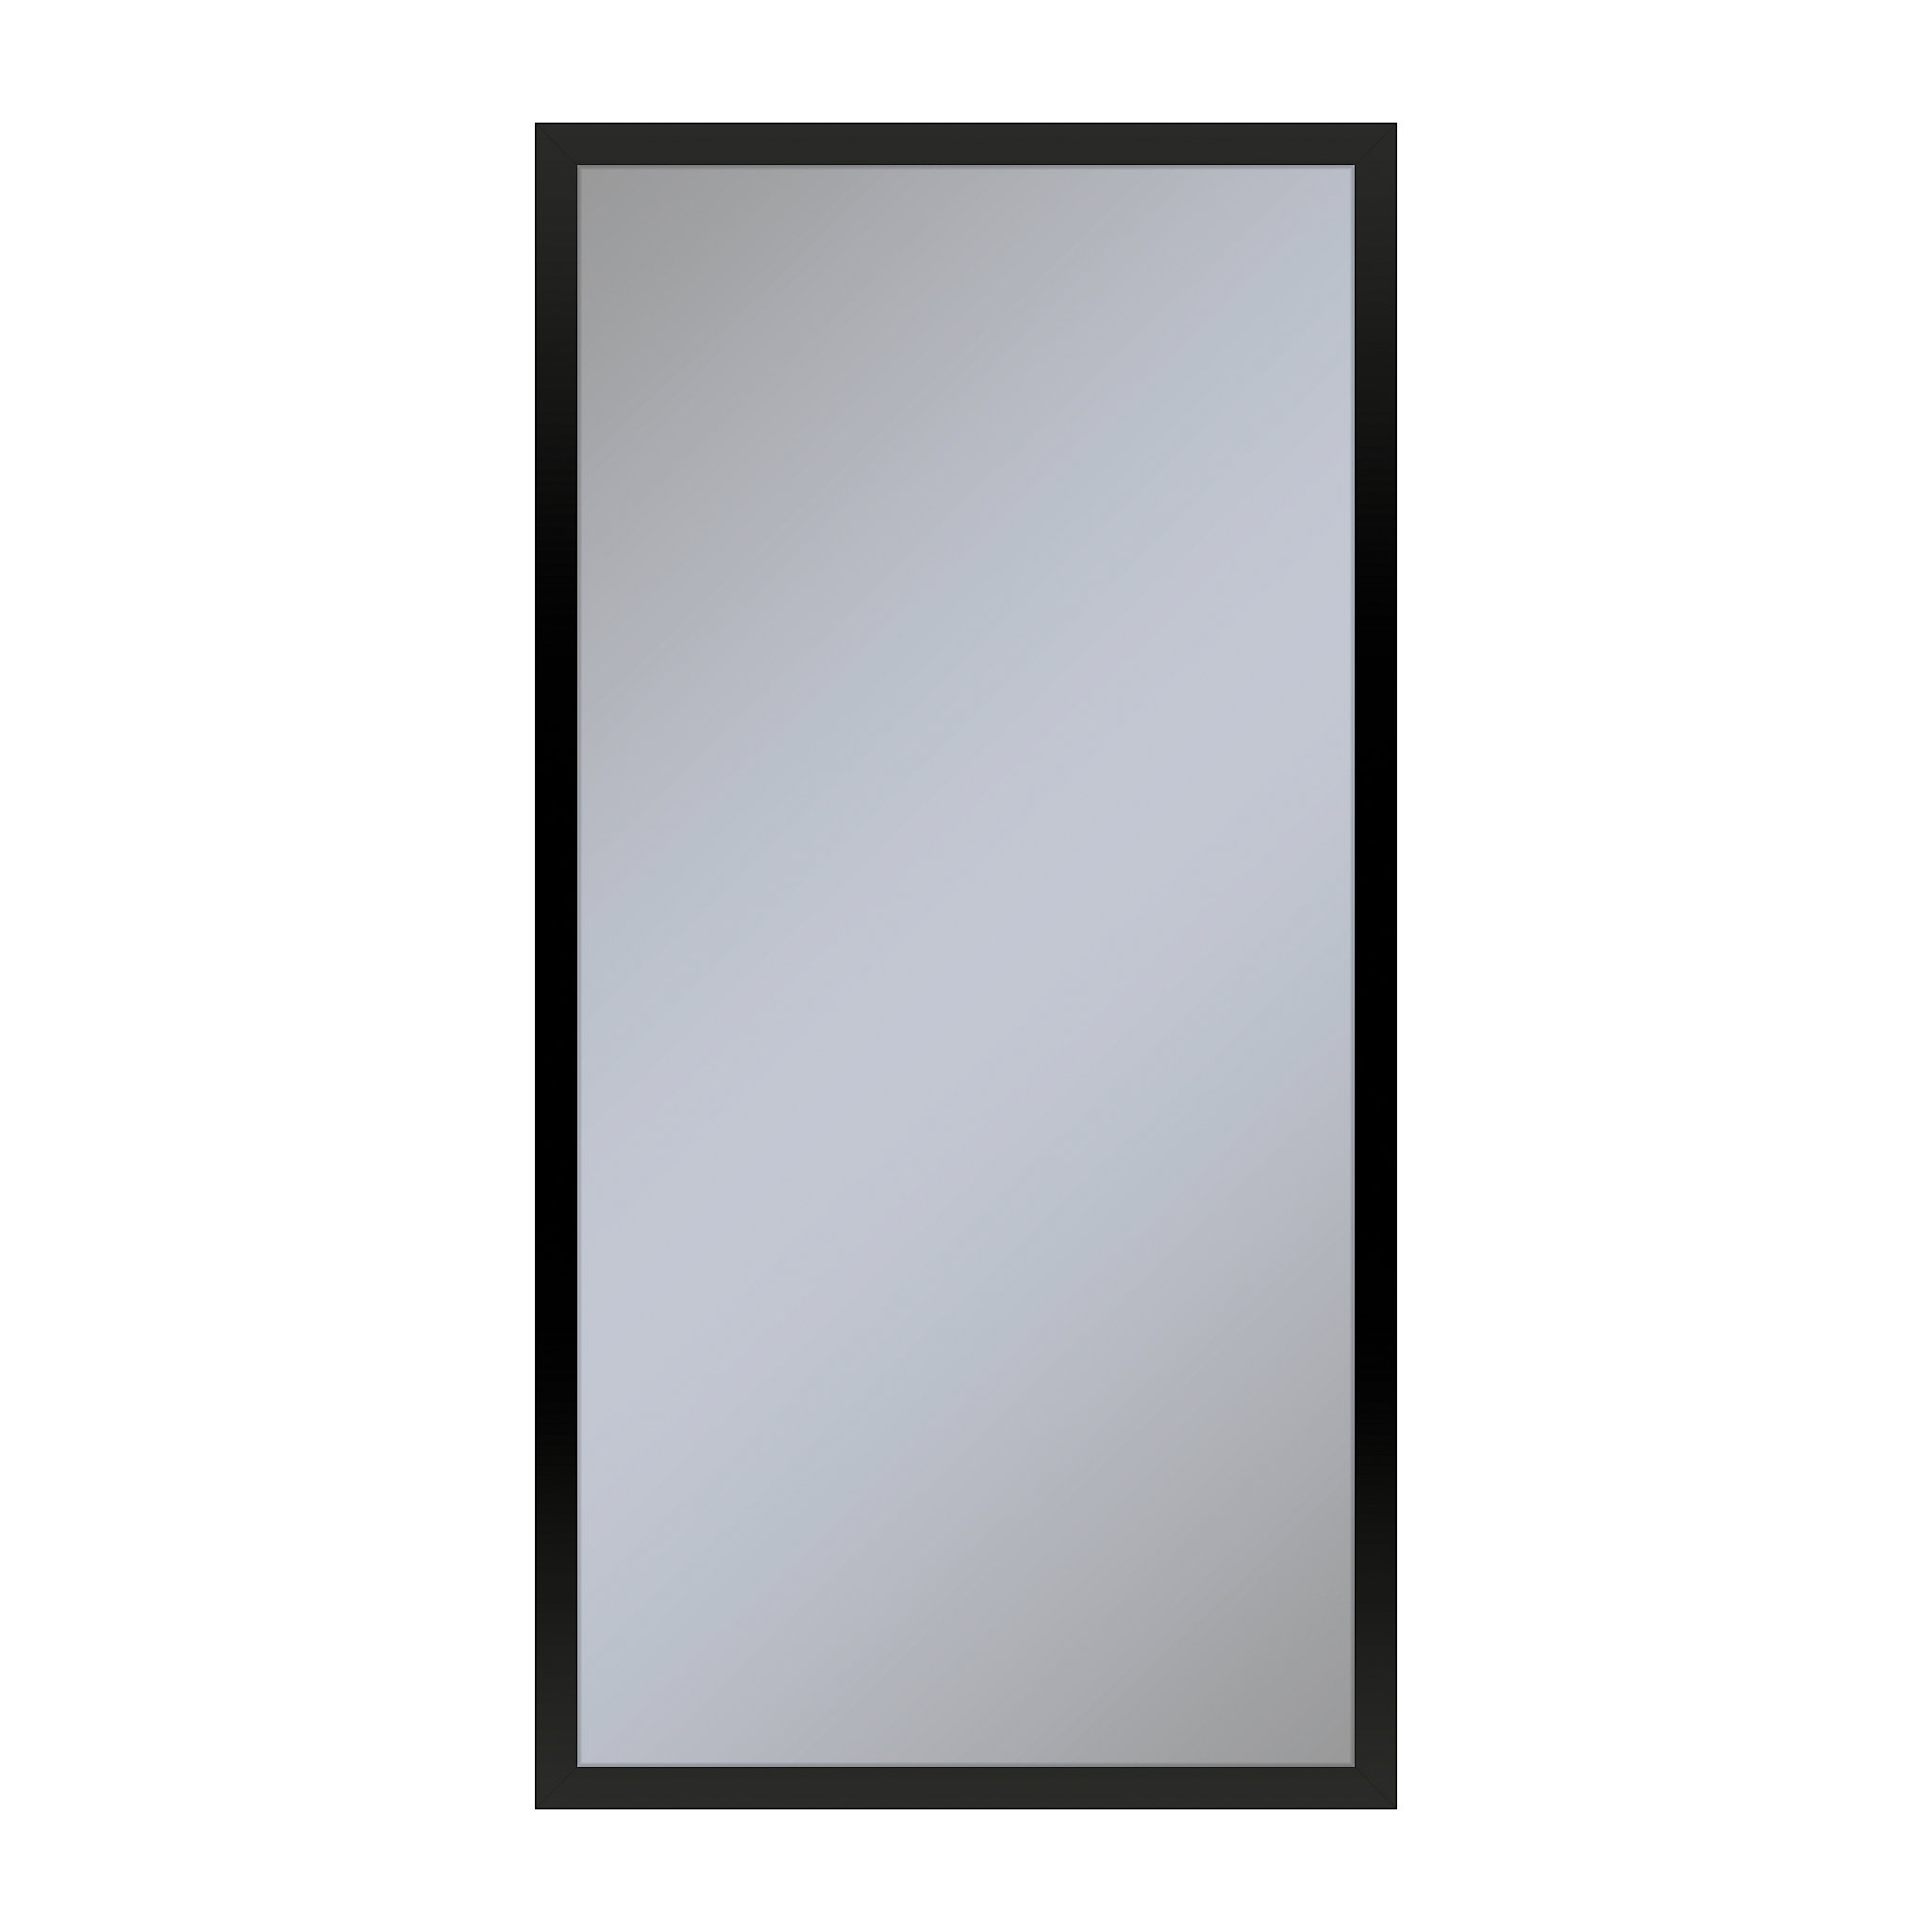 Robern PC1630D6TNN83 Profiles Framed Cabinet, 16" x 30" x 6", Matte Black, Non-Electric, Reversible Hinge